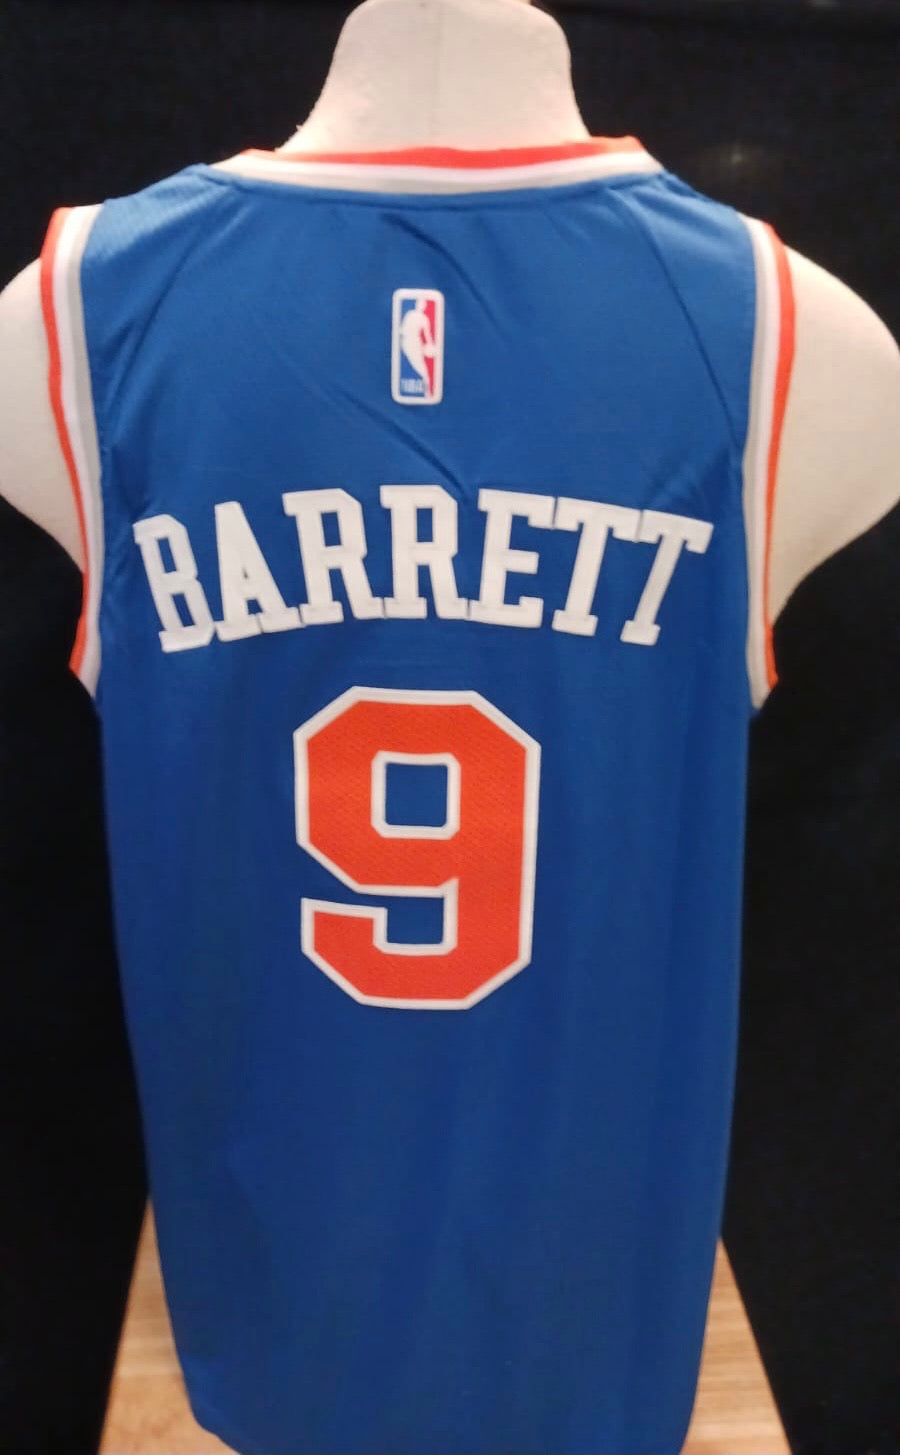 Rj Barrett New York Knicks shirt